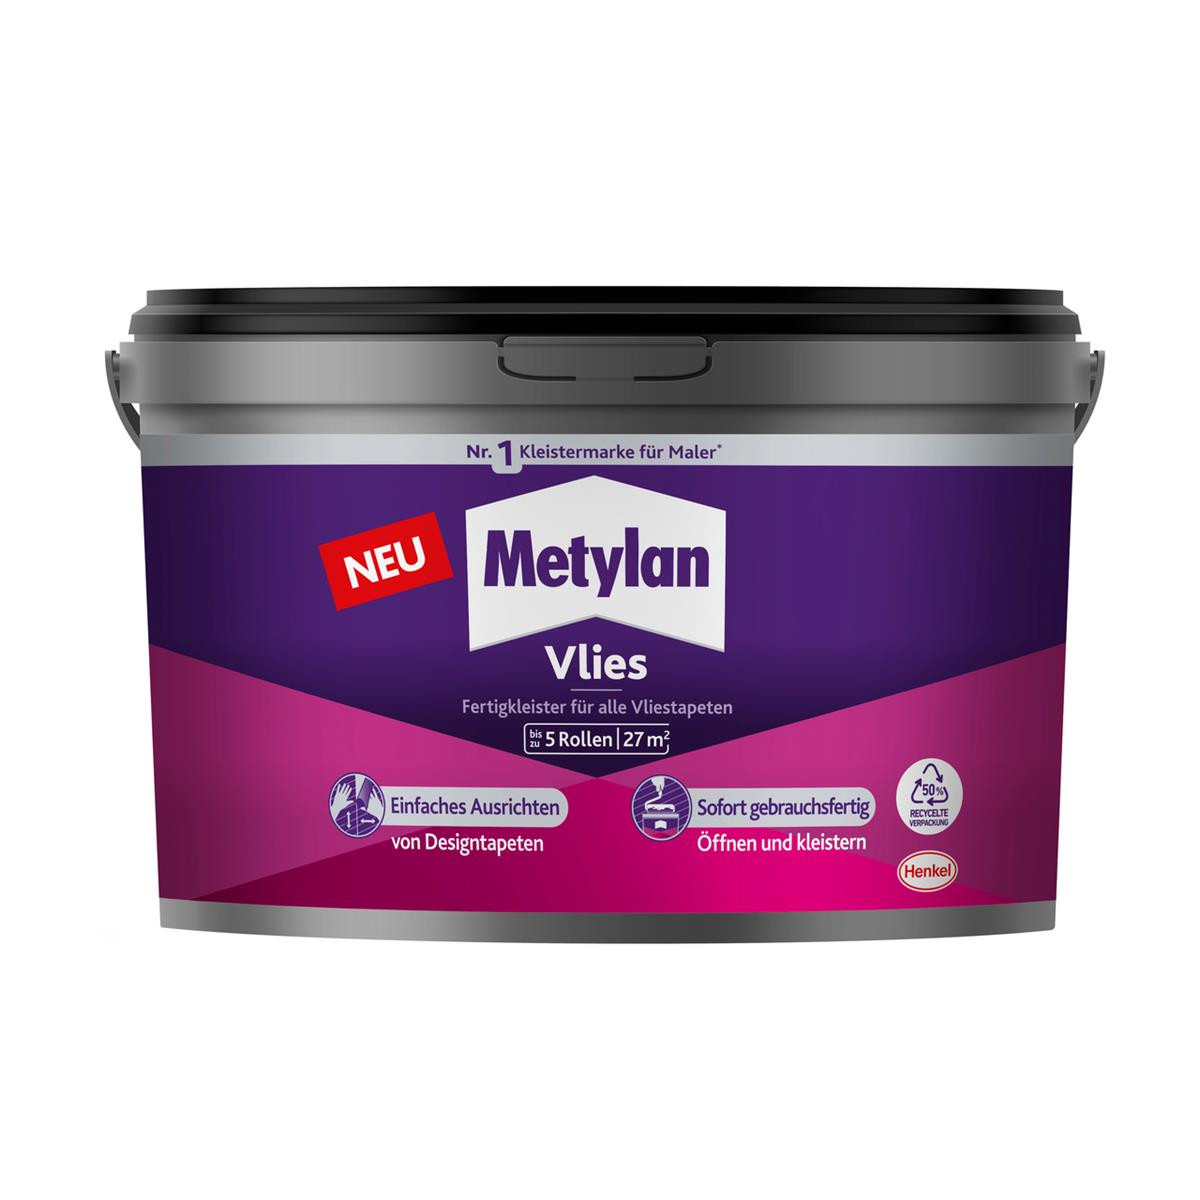 Metylan Vlies Fertigkleister - 3 kg